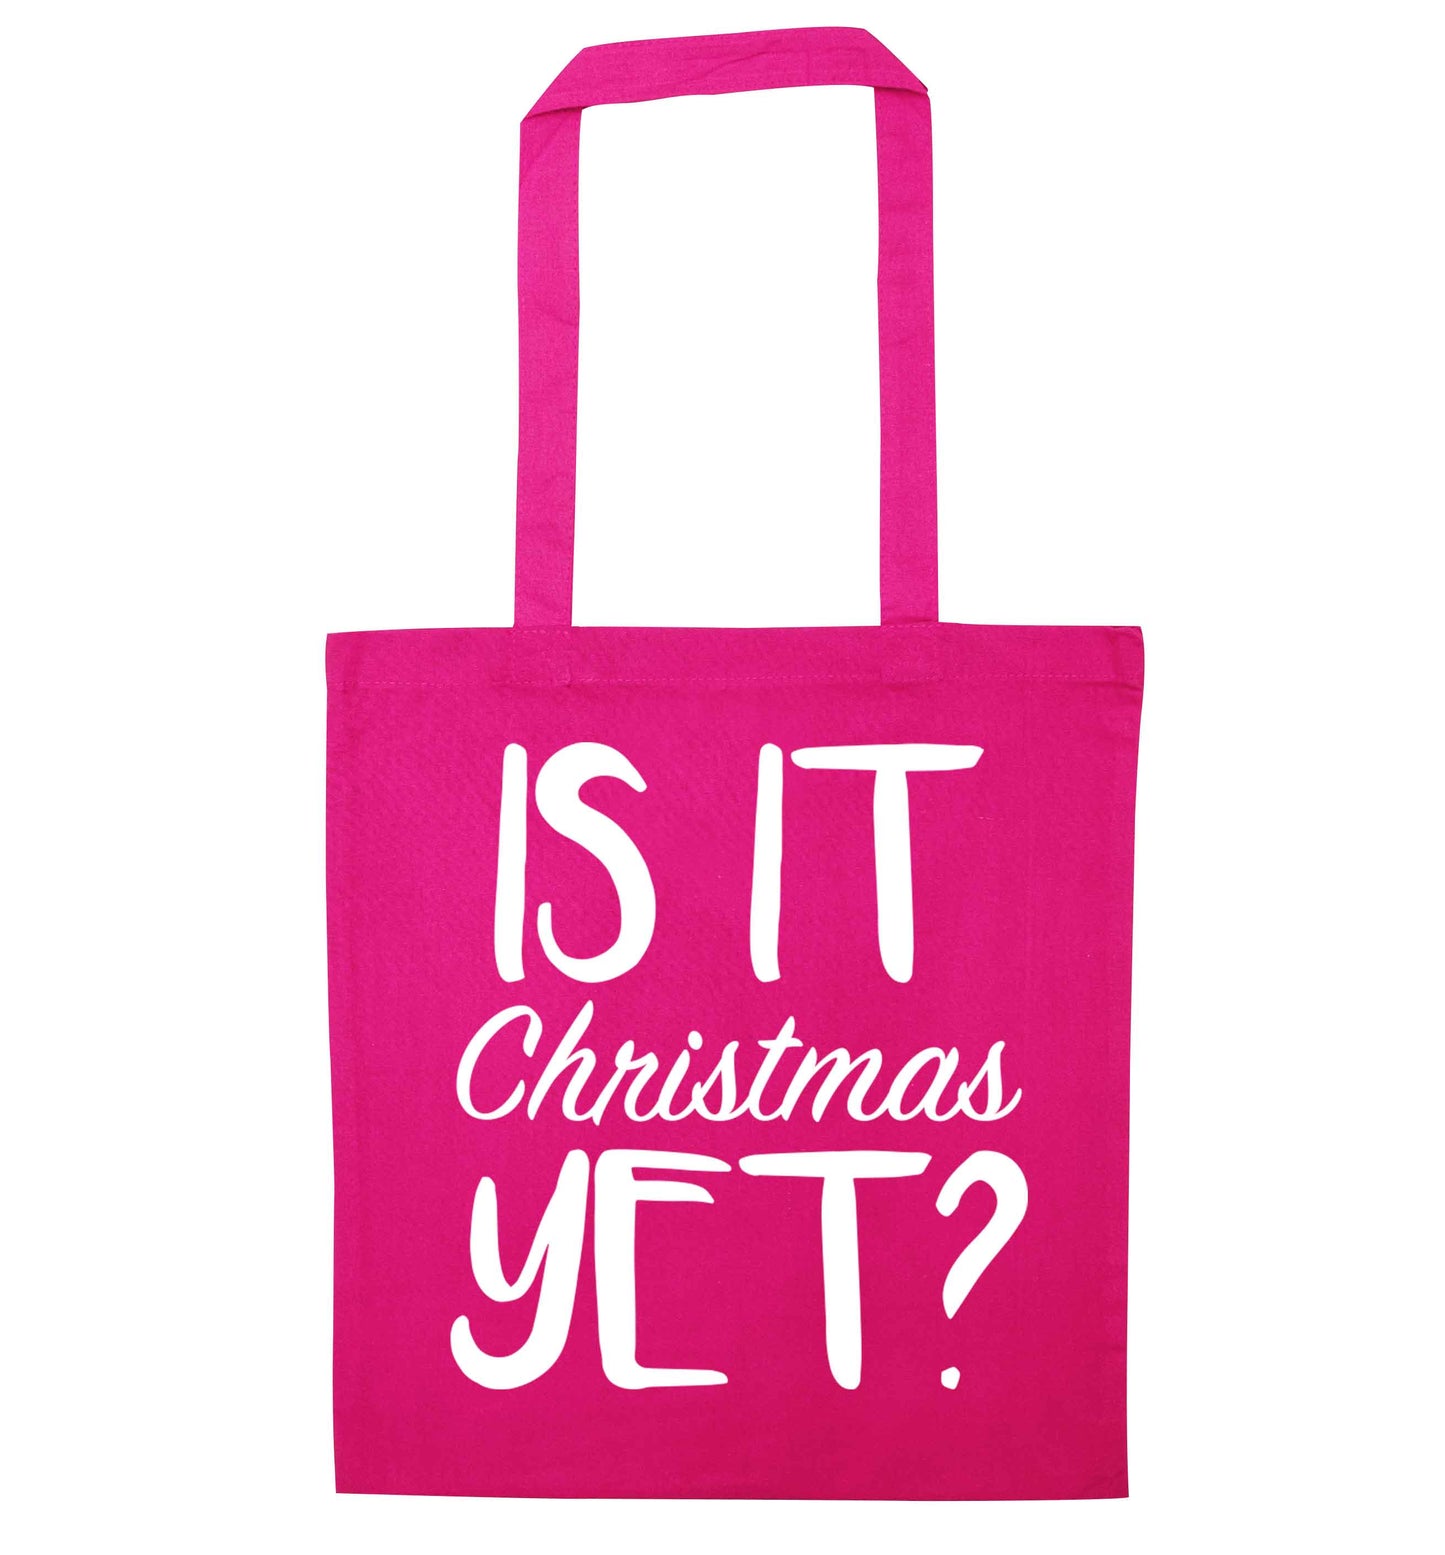 Is it Christmas yet? pink tote bag